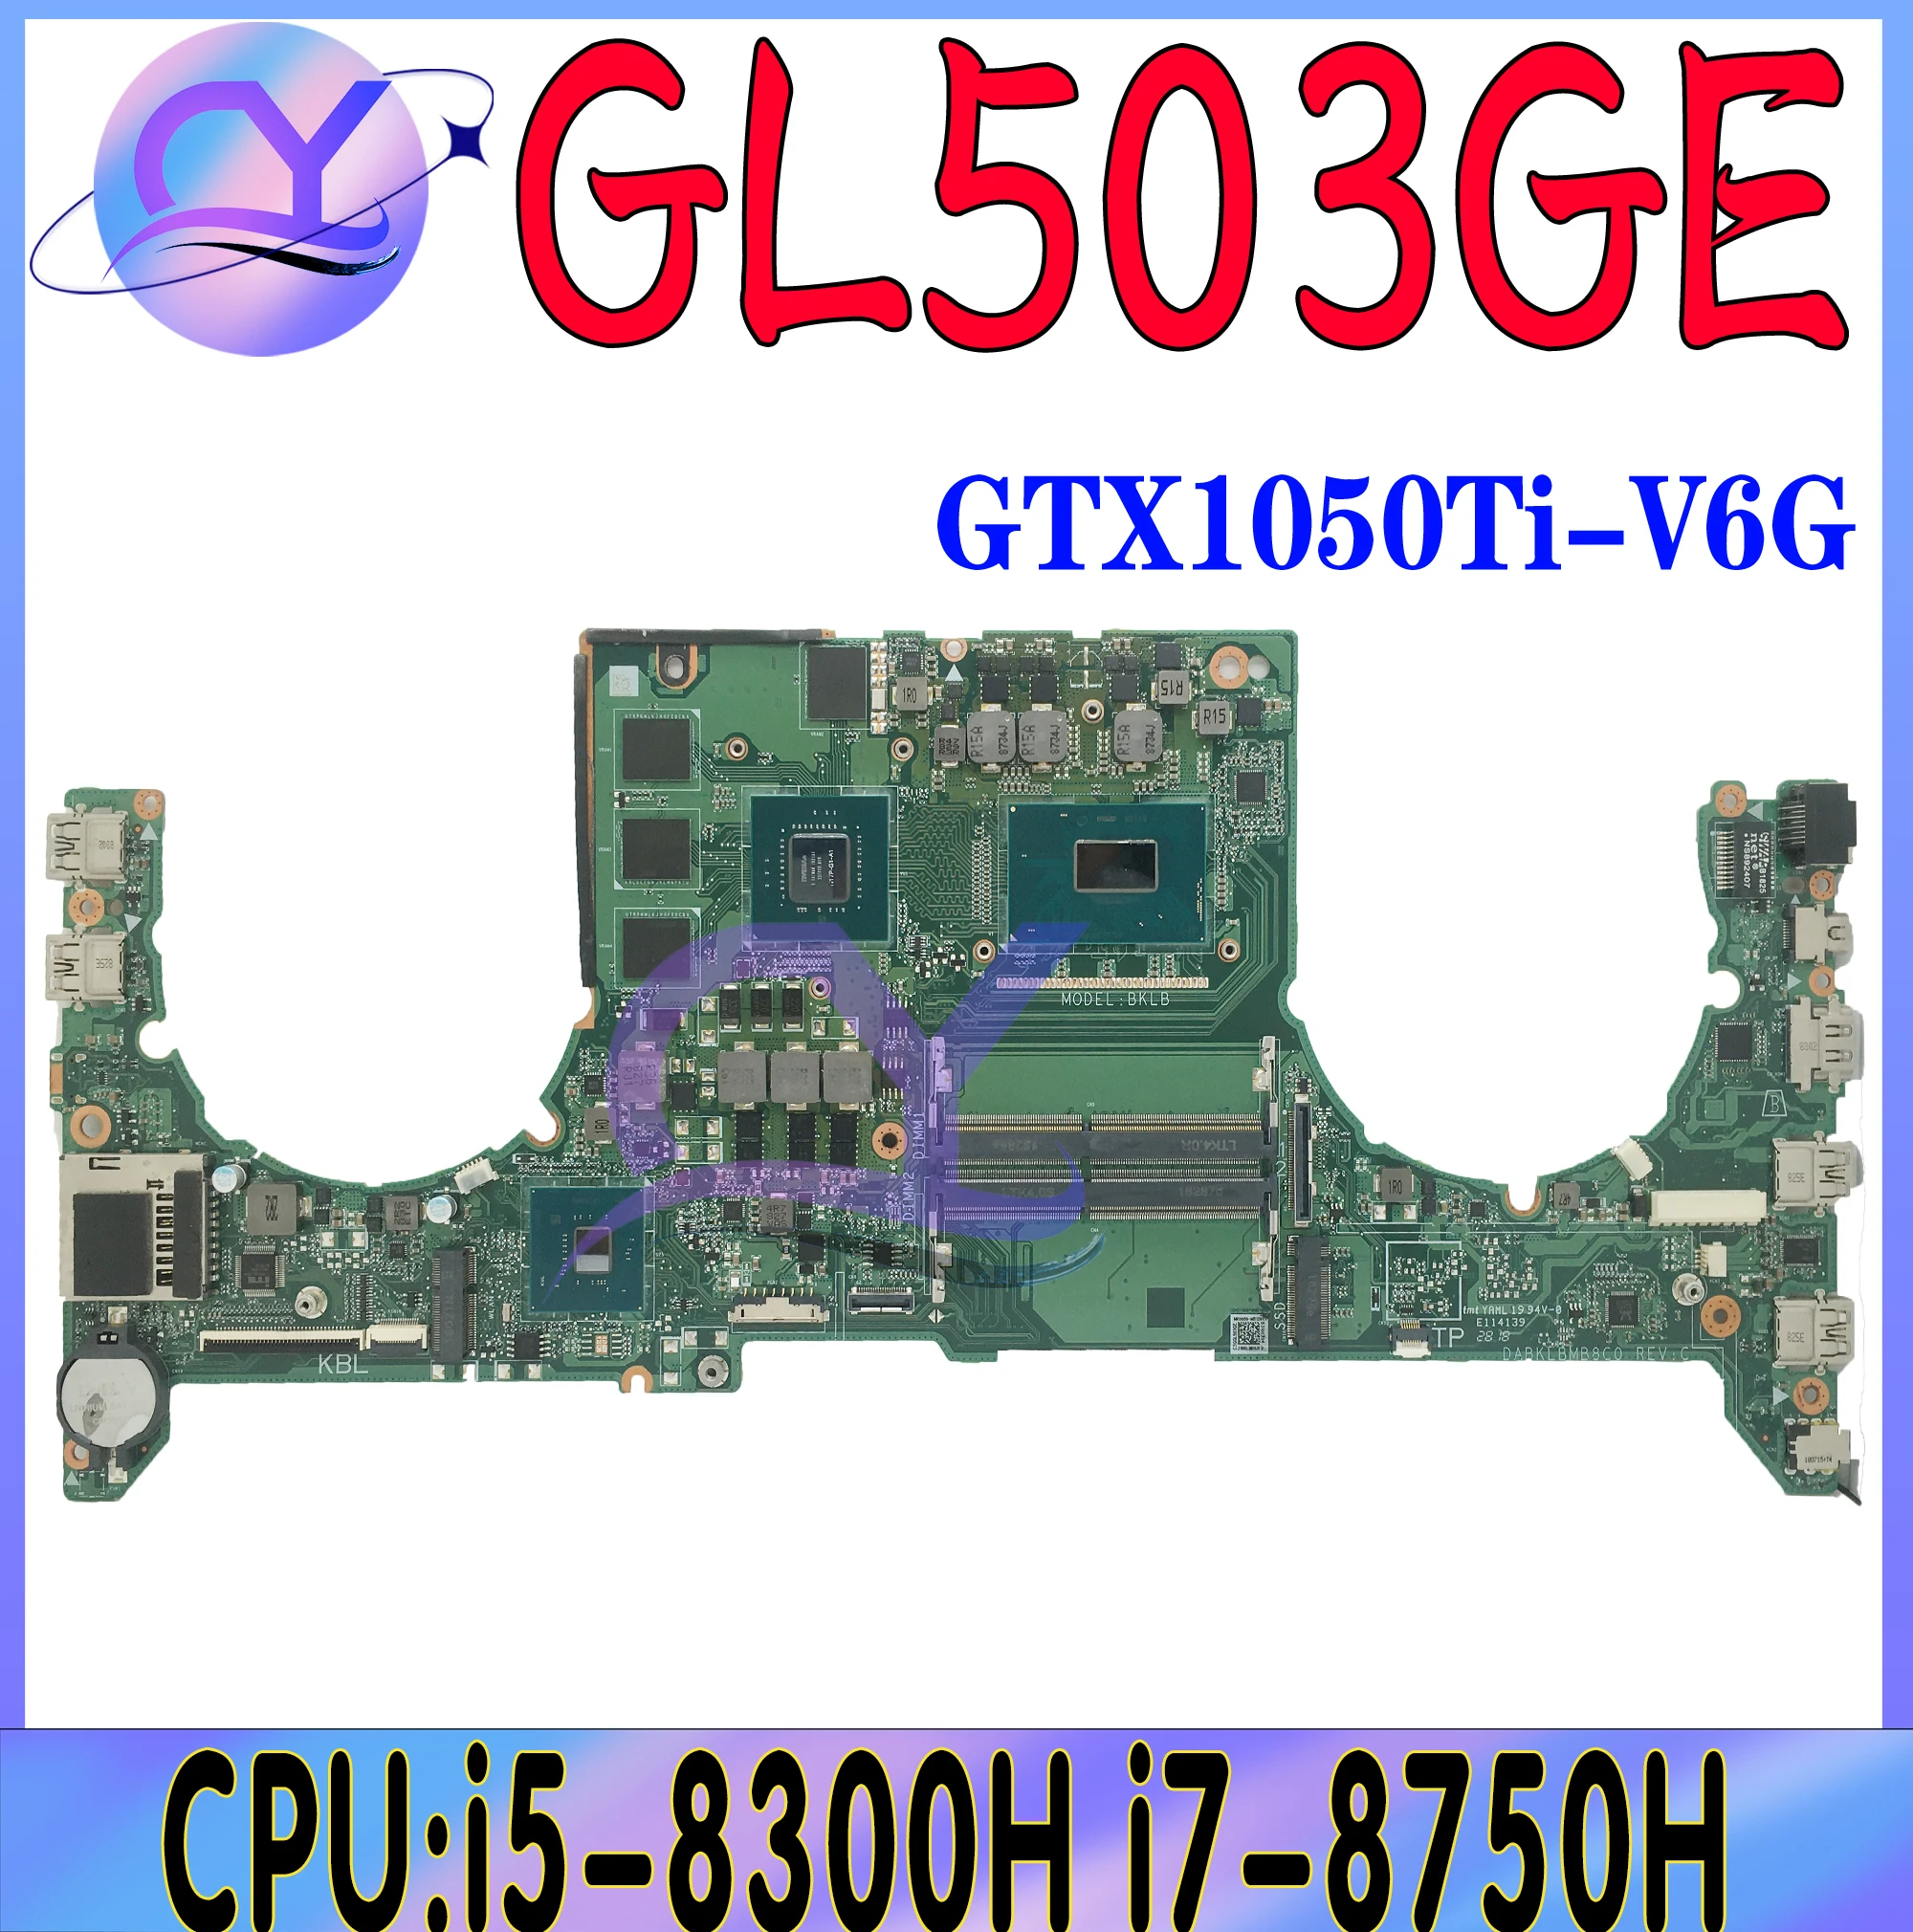 Placa base GL503GE para ordenador portátil, placa base para ASUS ROG Strix S5BE GL503G PX503GE MW503GE DABKLBMB8C0 con i5 i7-8th Gen GTX1050Ti/V4G